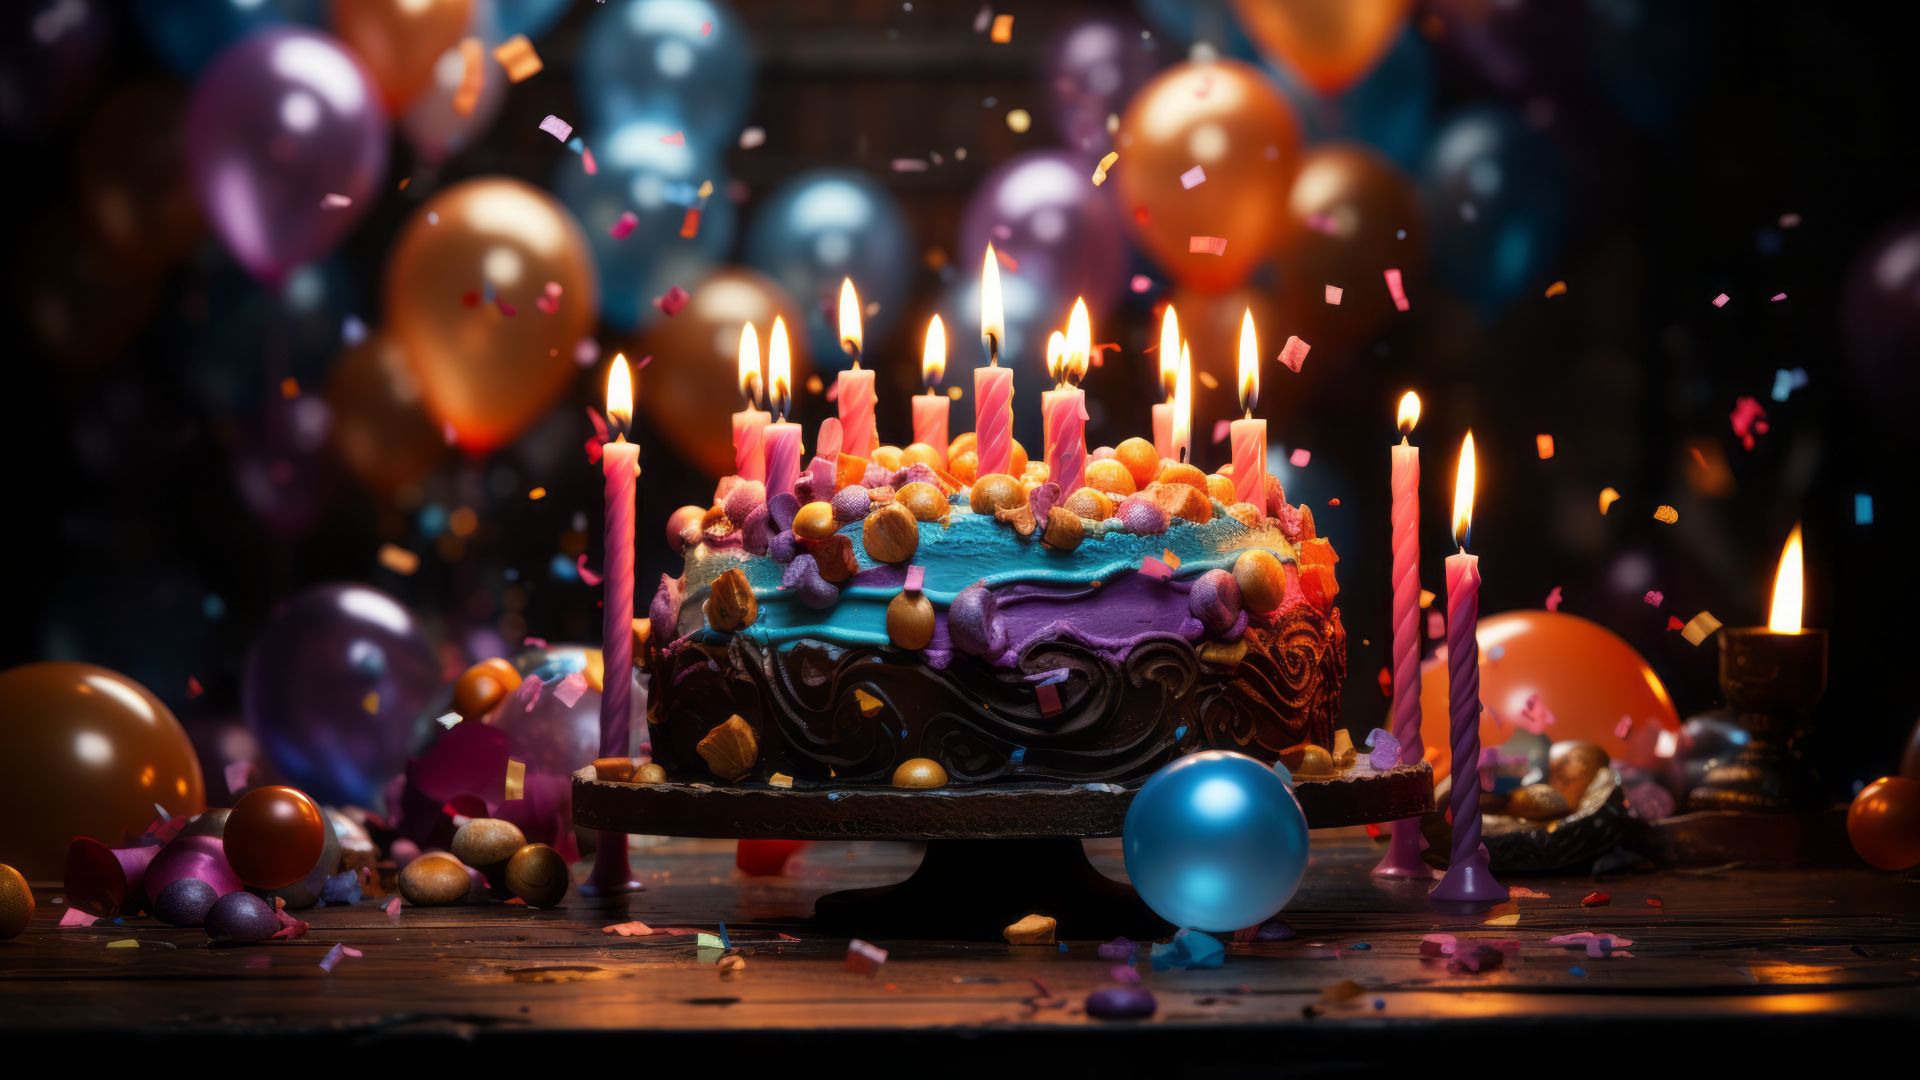 День рождения, Birthday background, balloons, cake, gifts (horizontal)